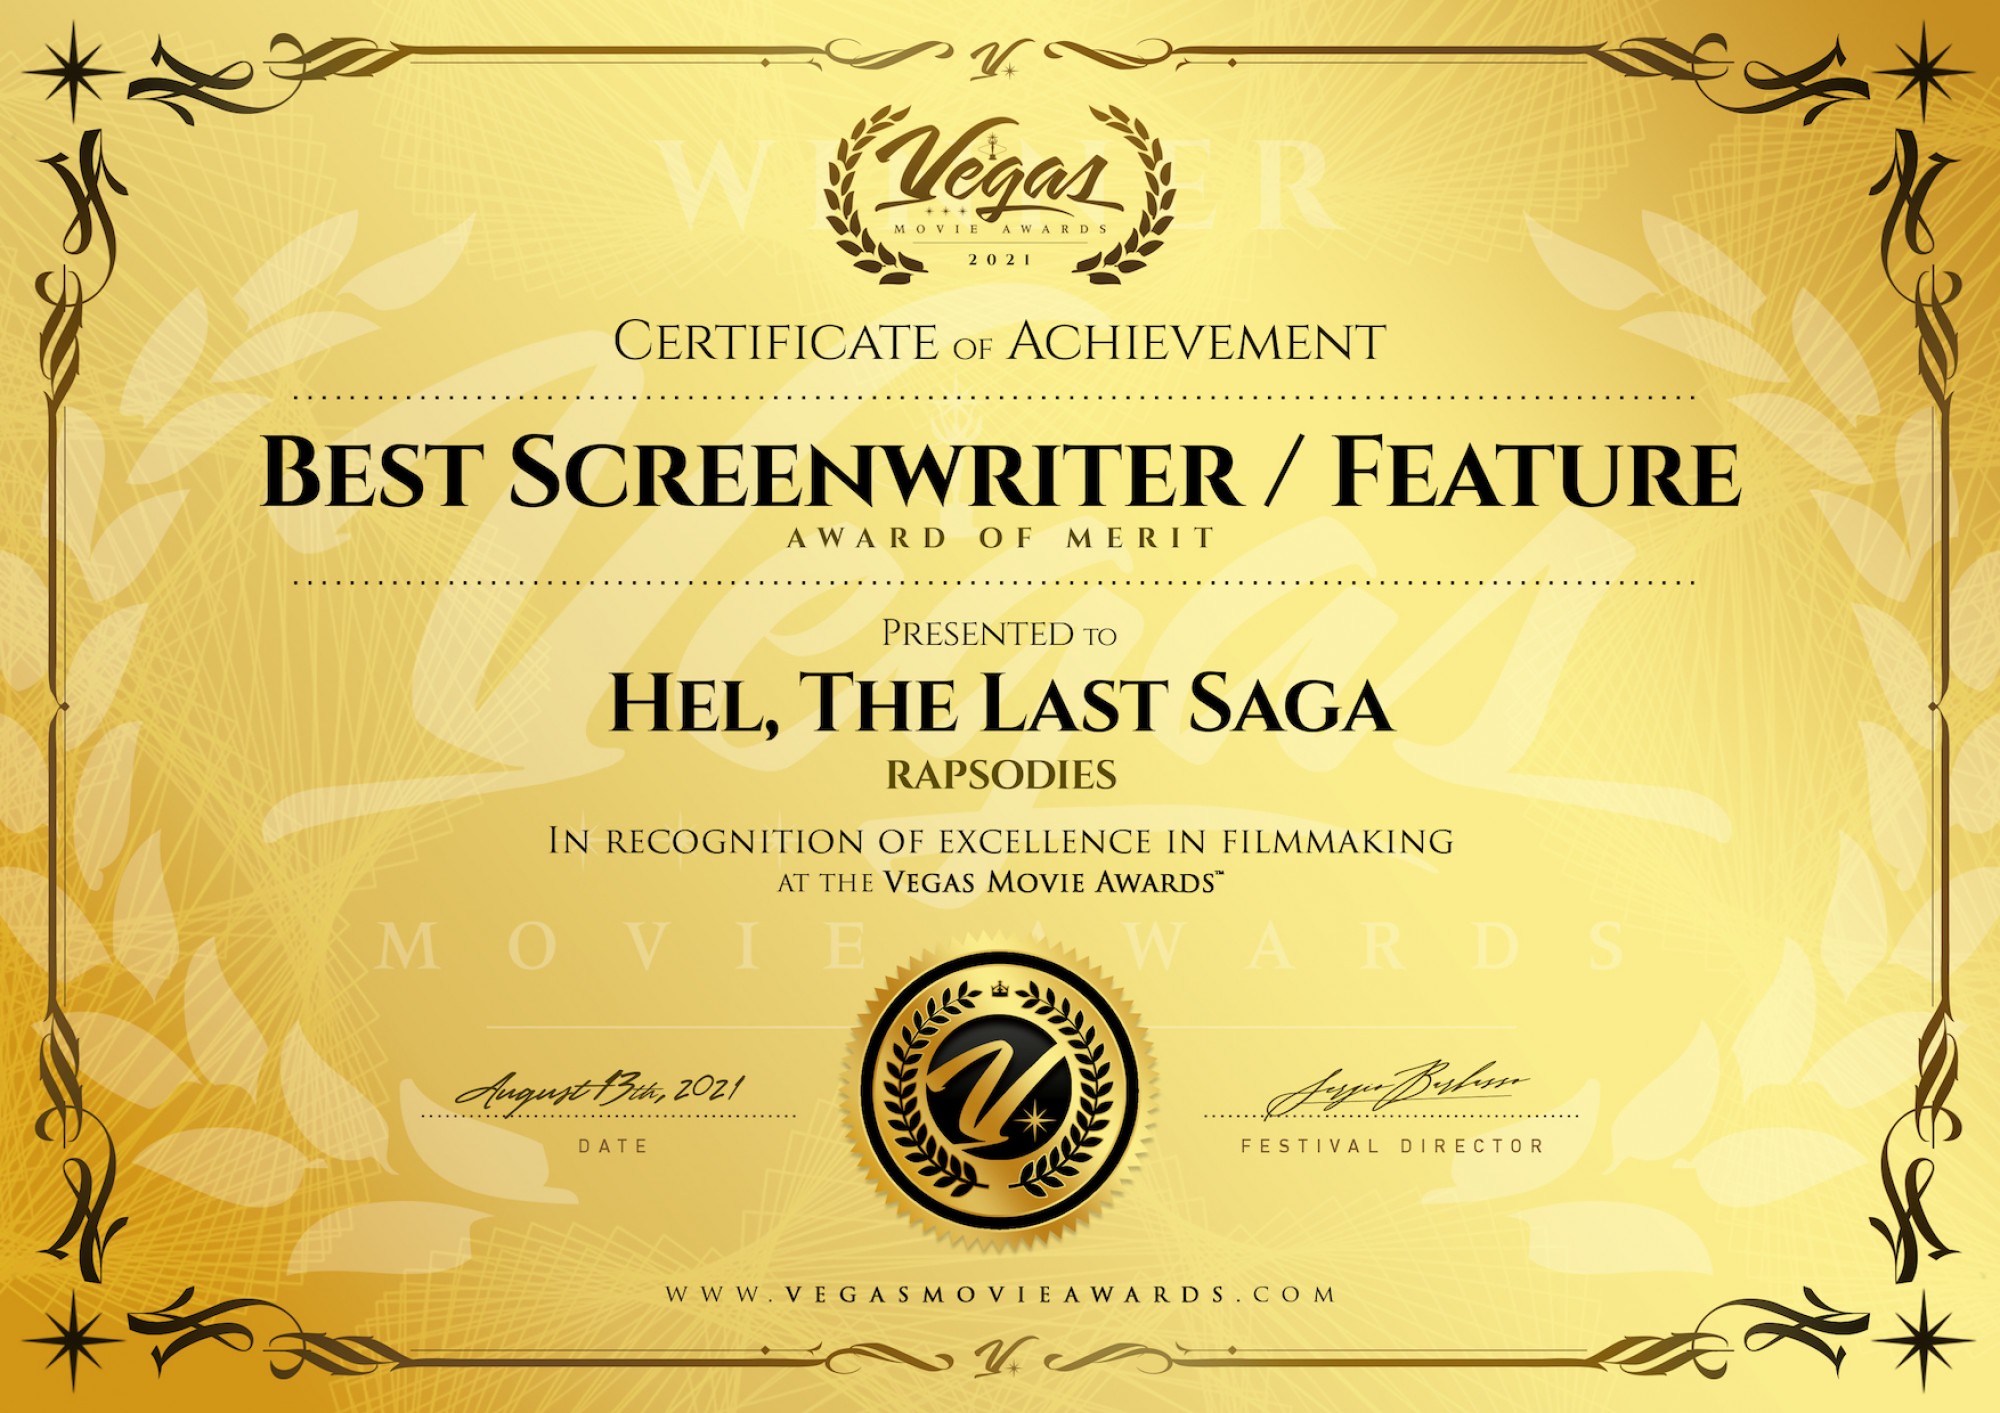 Hel, the last saga - Best Screenwriter/Feature